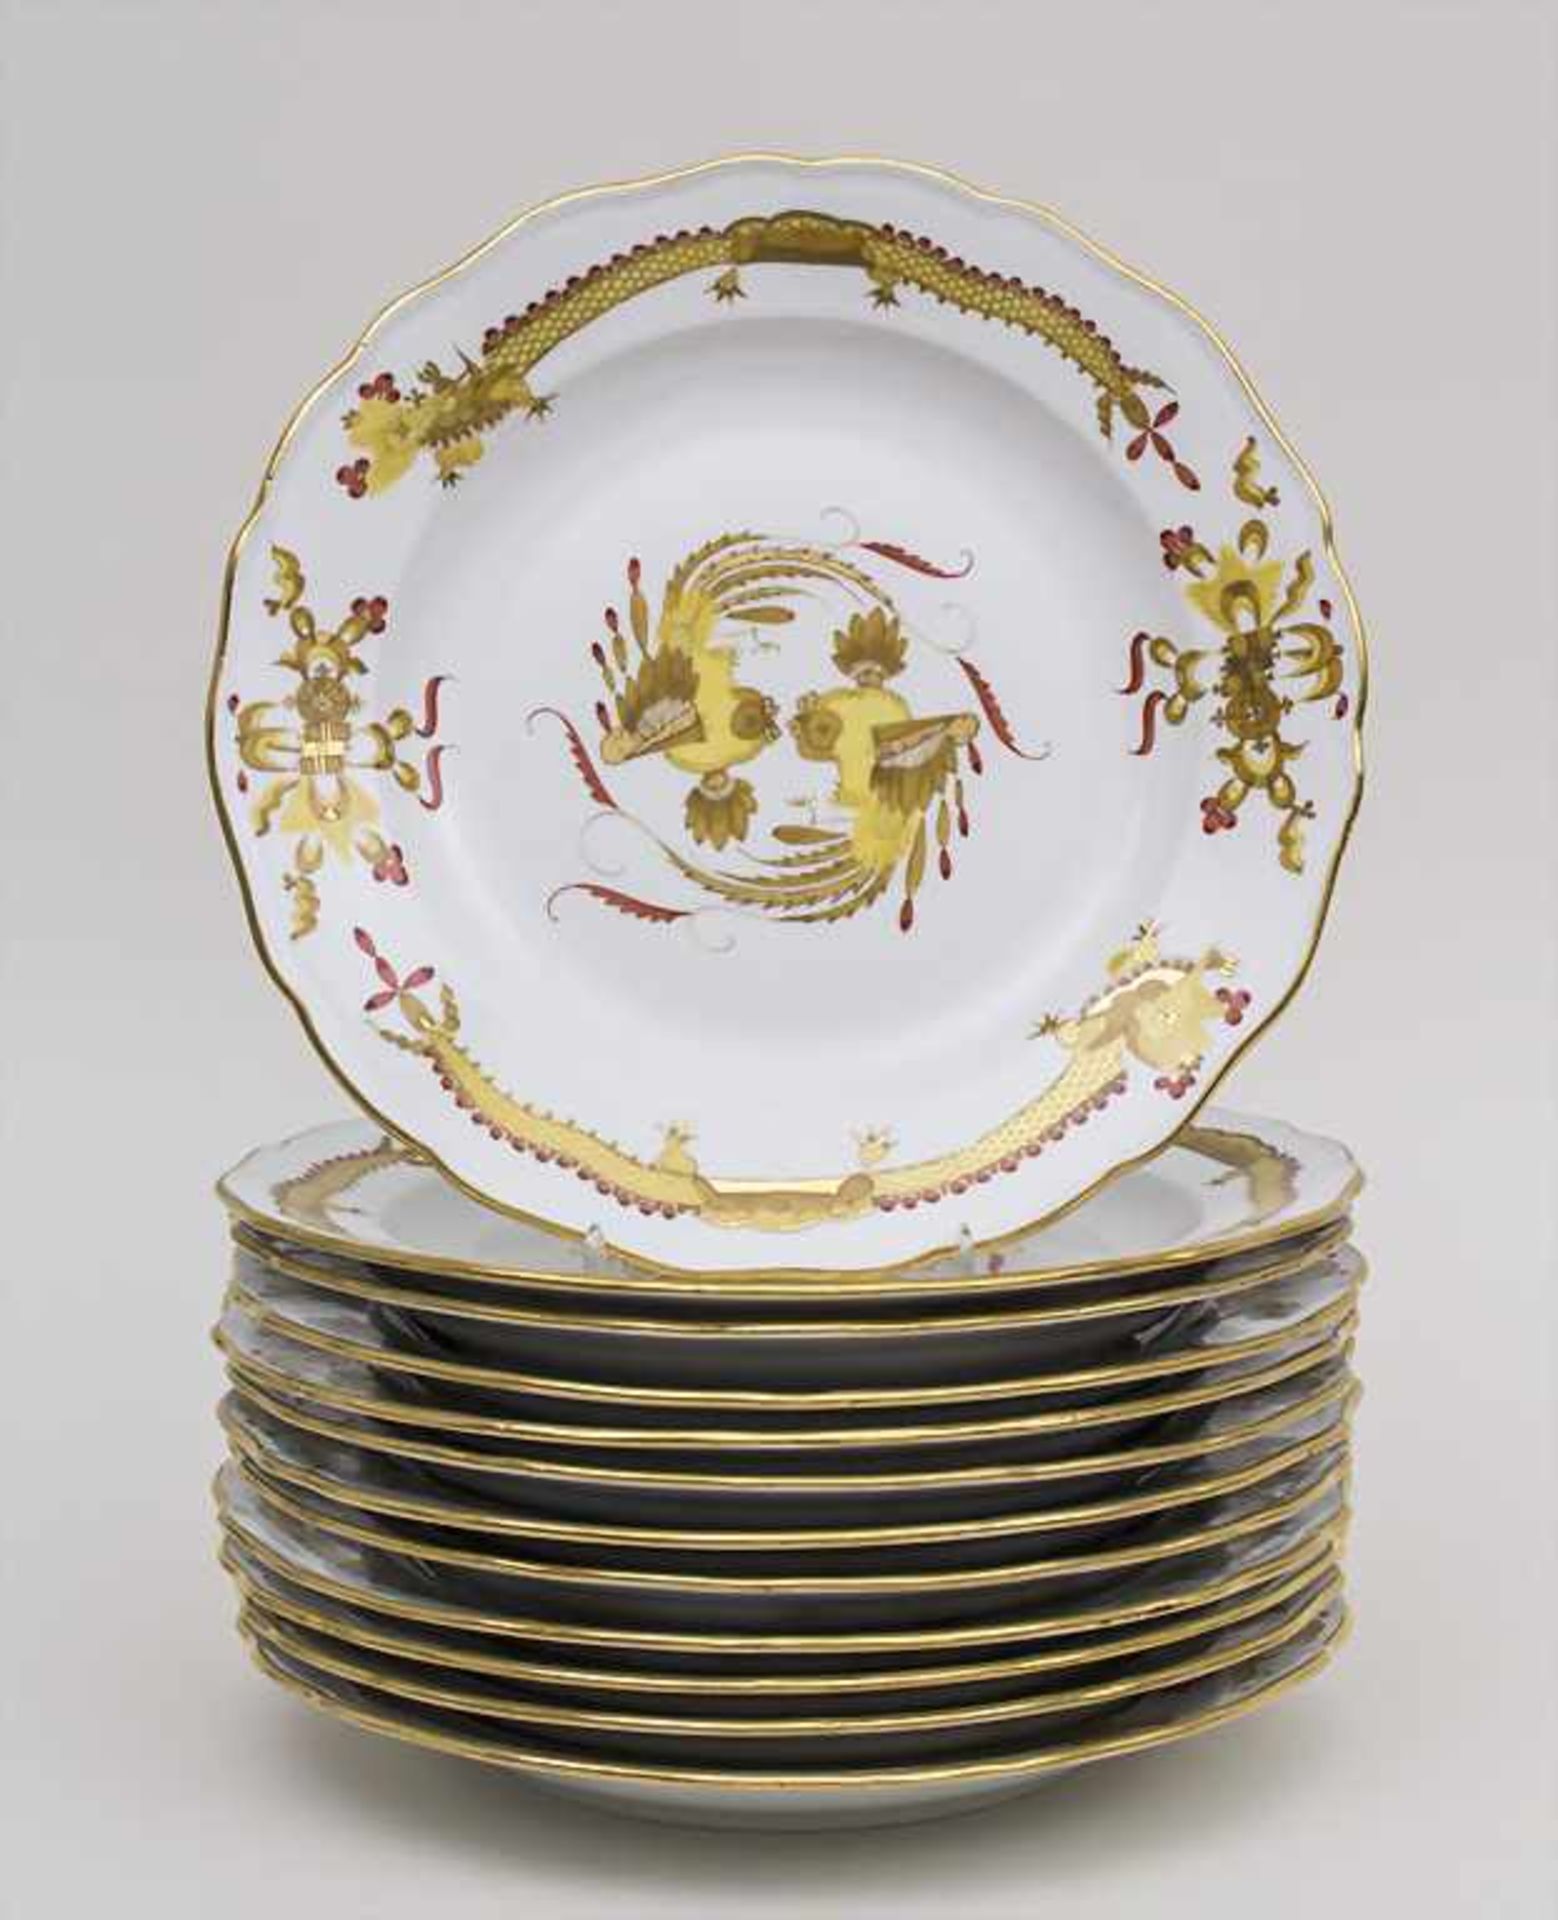 12 Speiseteller 'Reicher Drache' / A Set Of 12 Dinner Plates, Meissen, 2. Hälfte 19. Jh. Material: